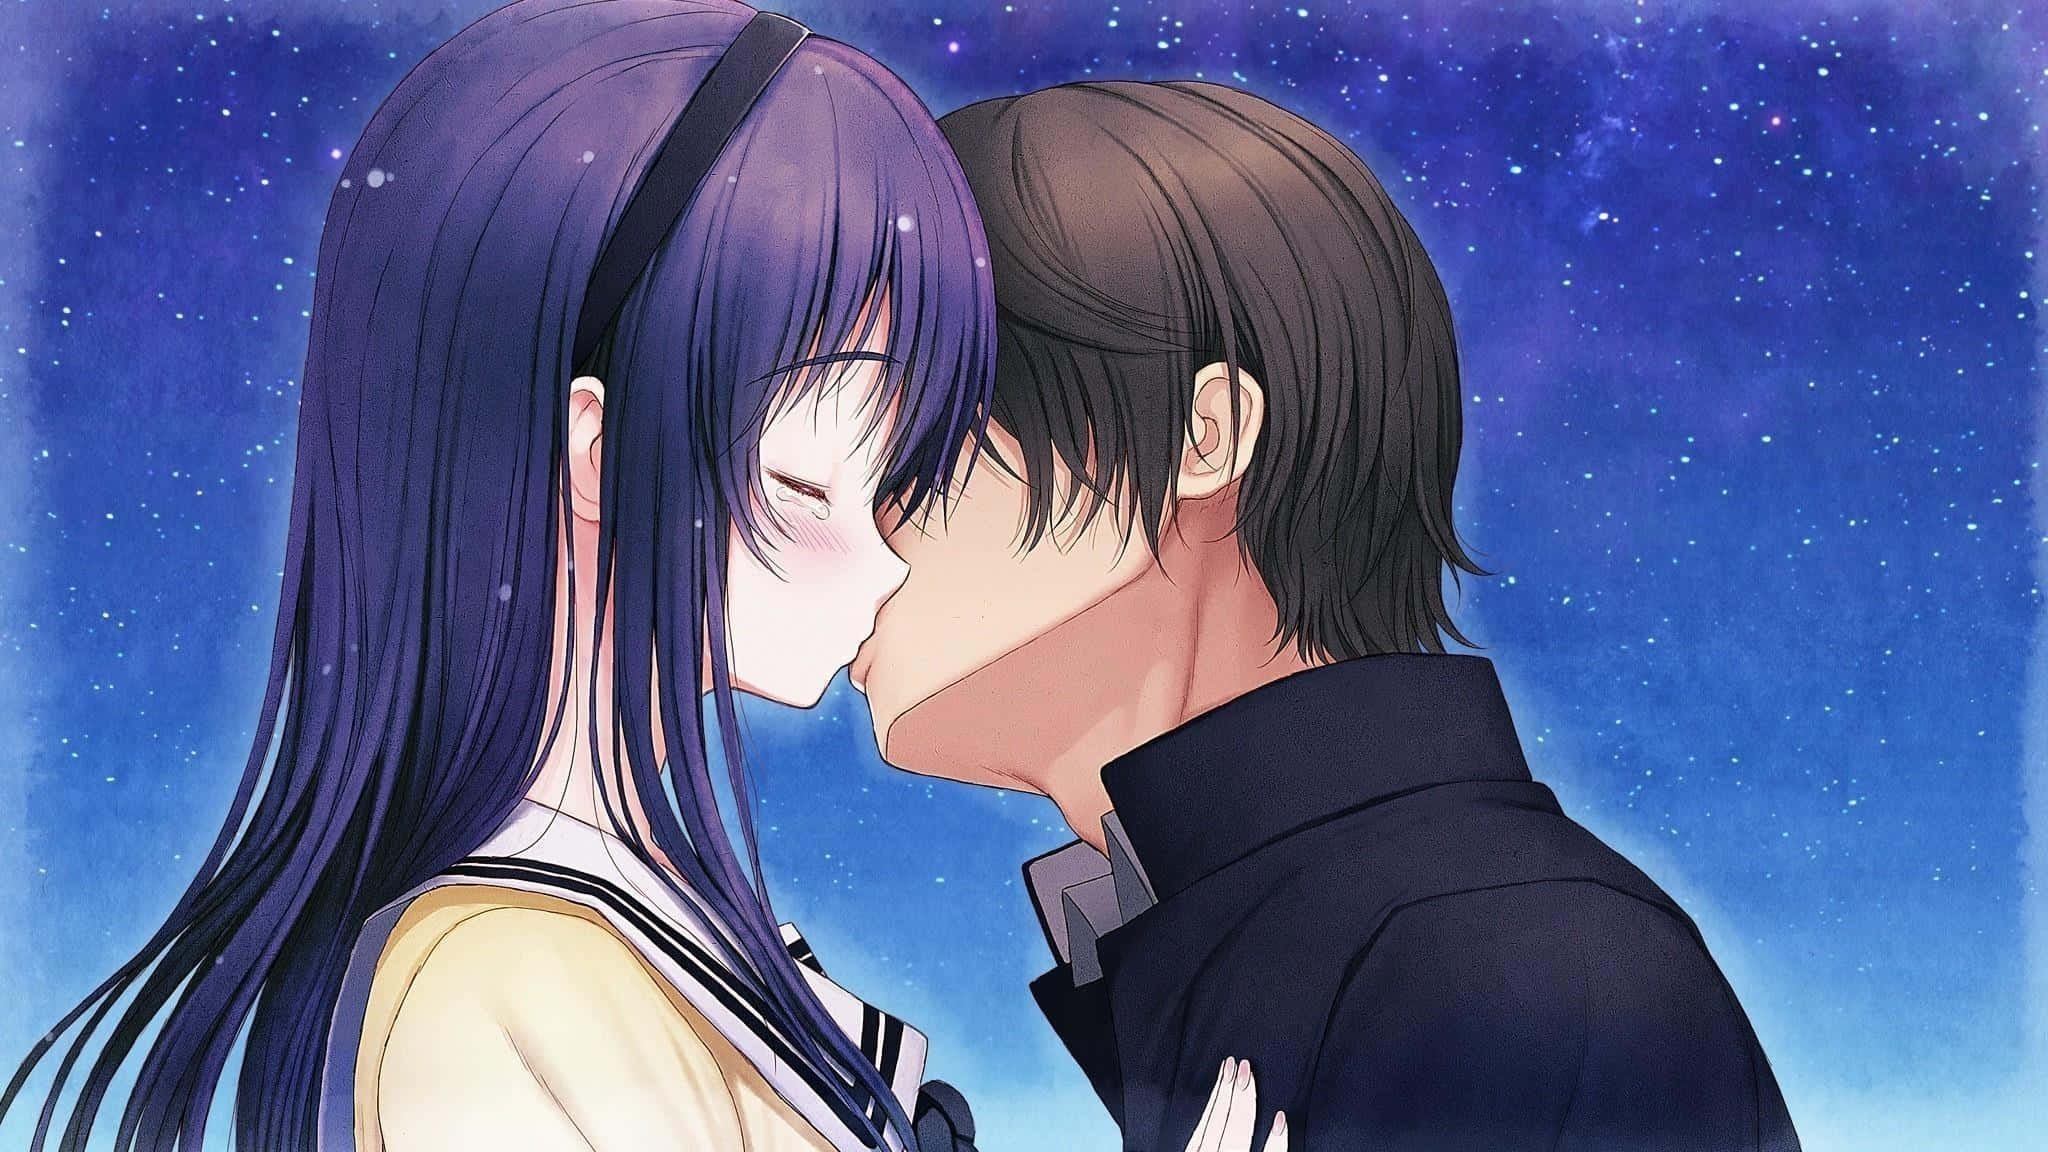 A romantic anime love moment.